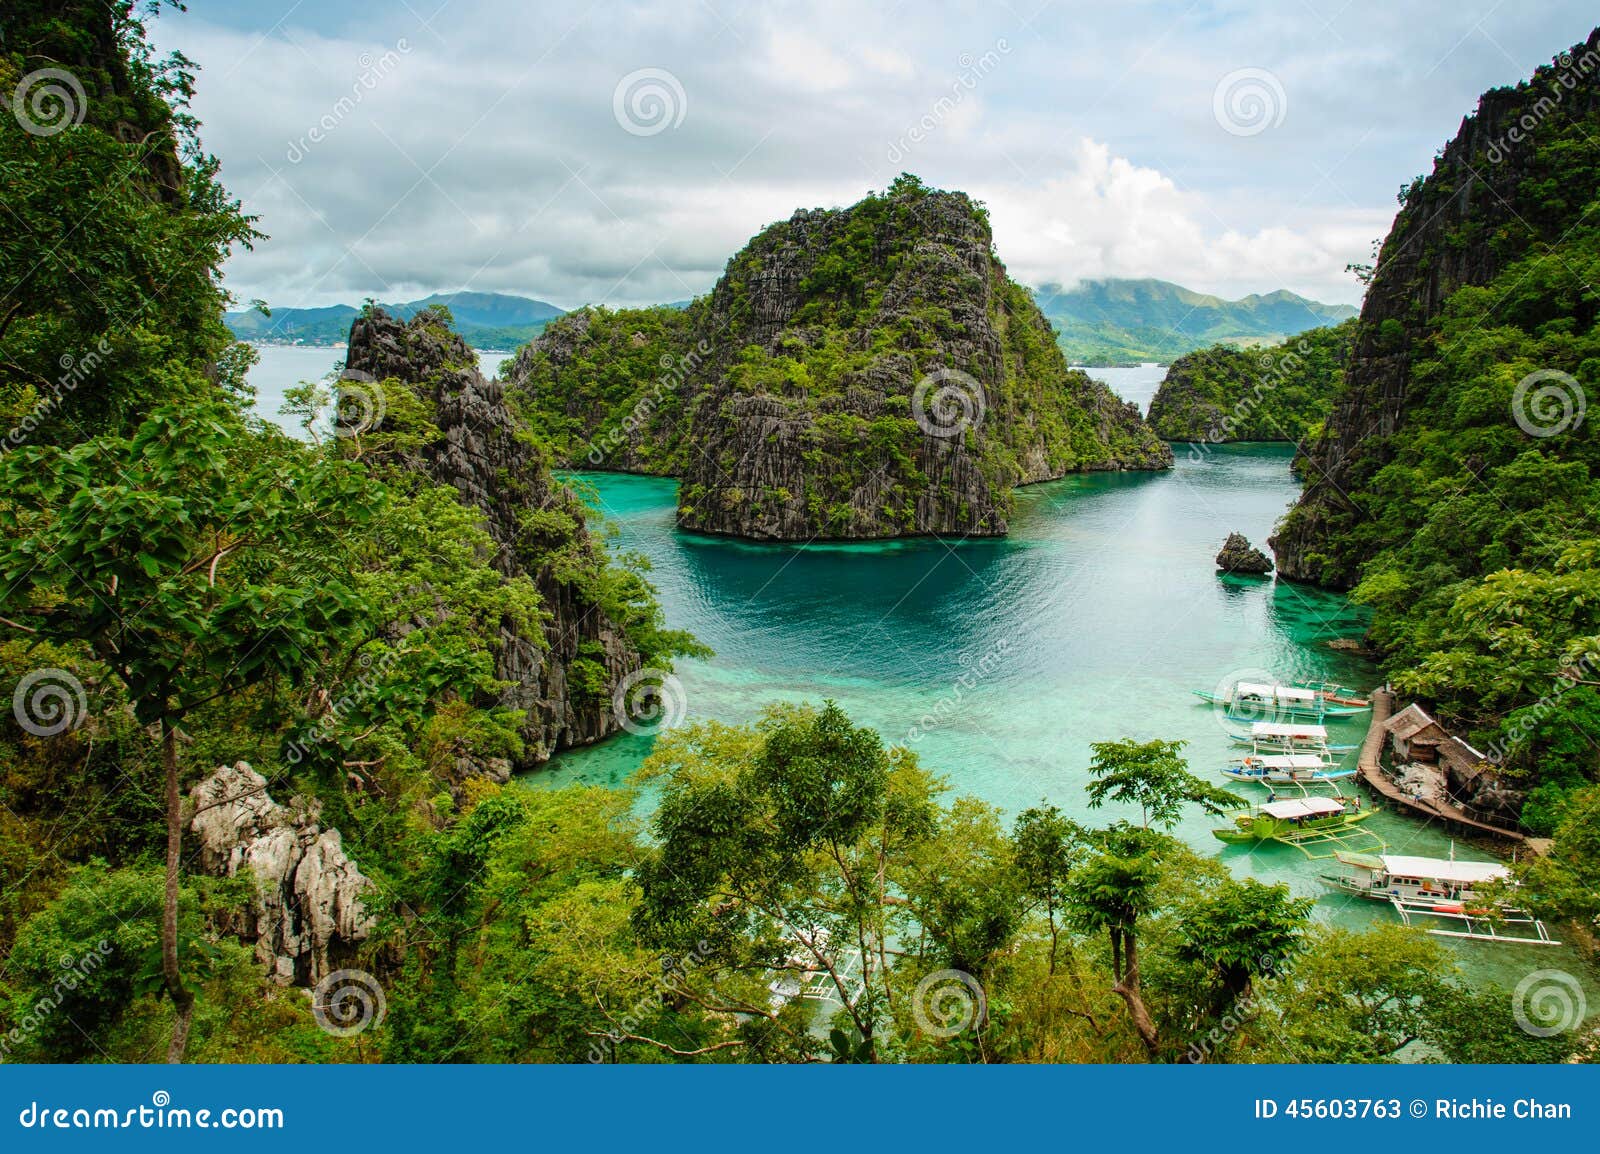 tropical shore in coron, philippines